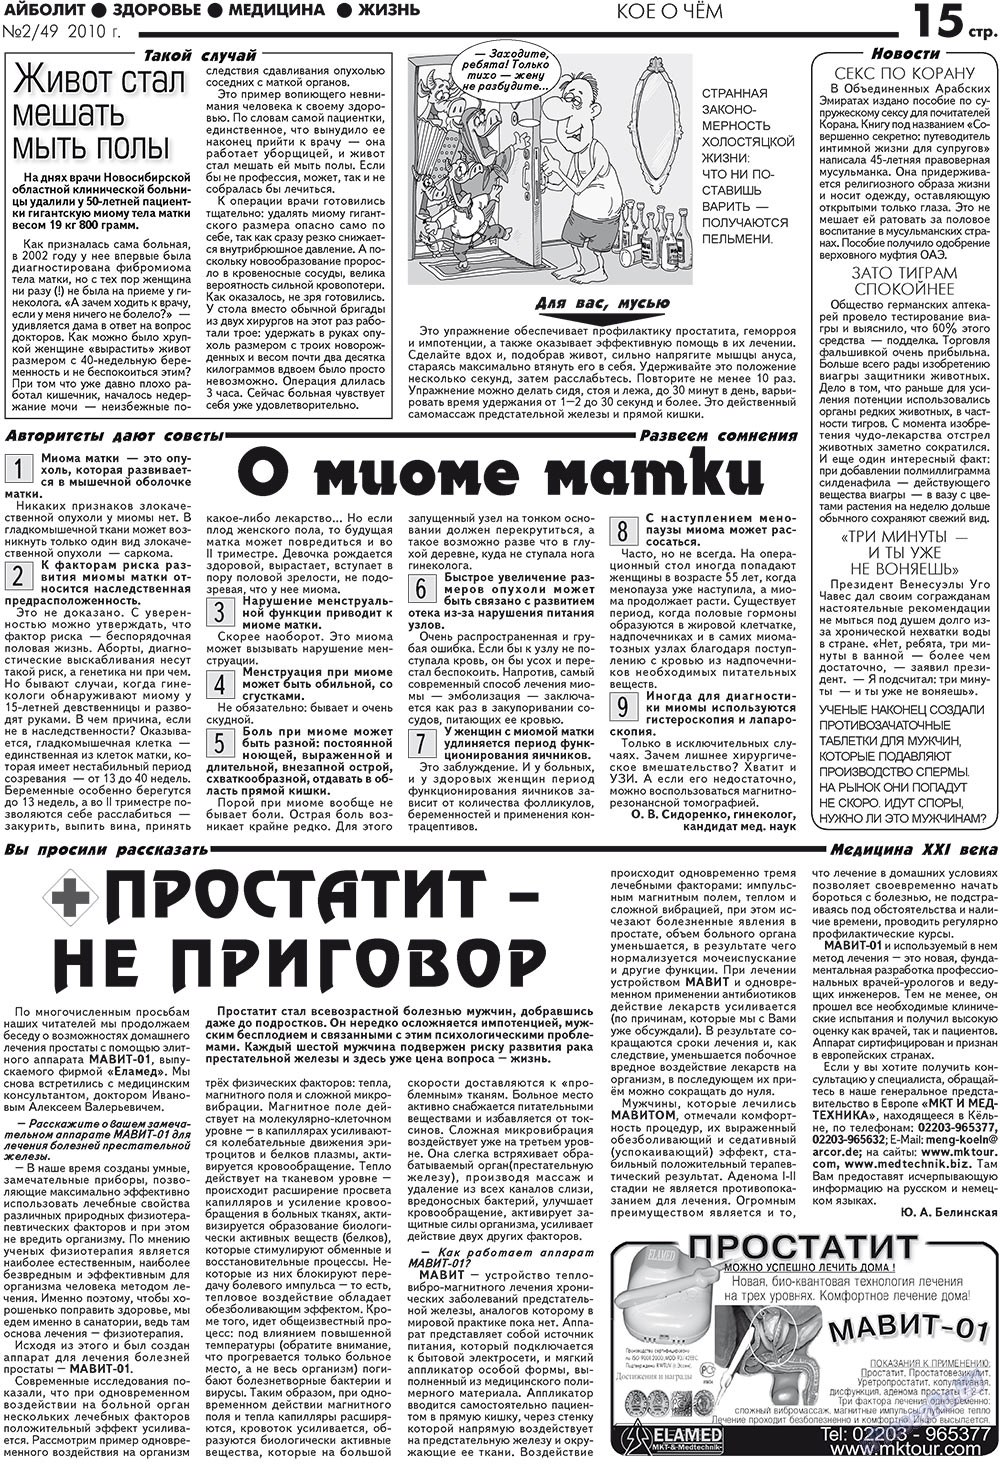 АйБолит (газета). 2010 год, номер 2, стр. 15